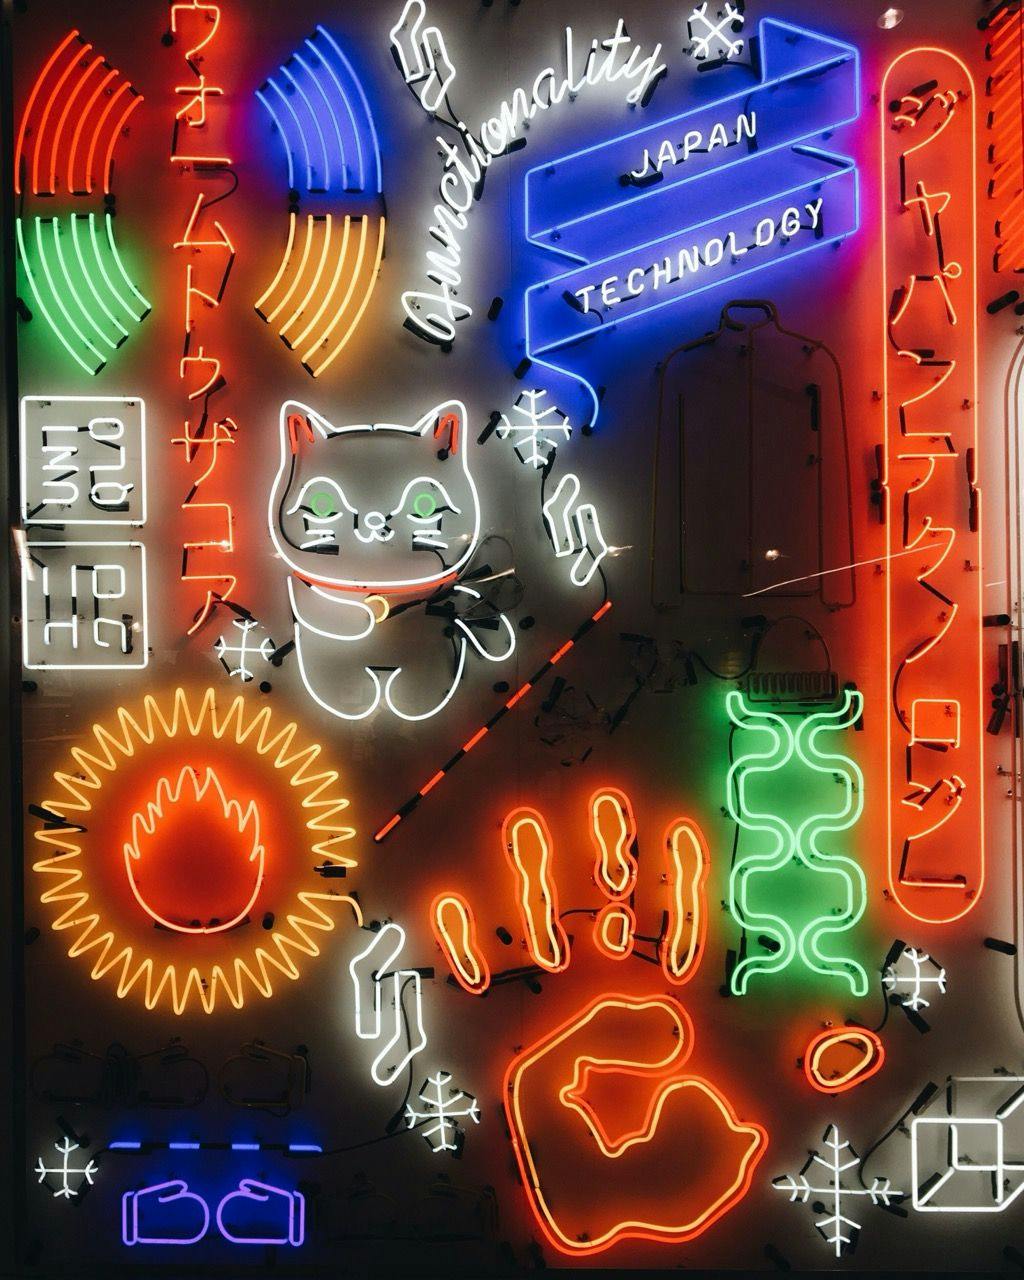 Japanese anime style neon lights.